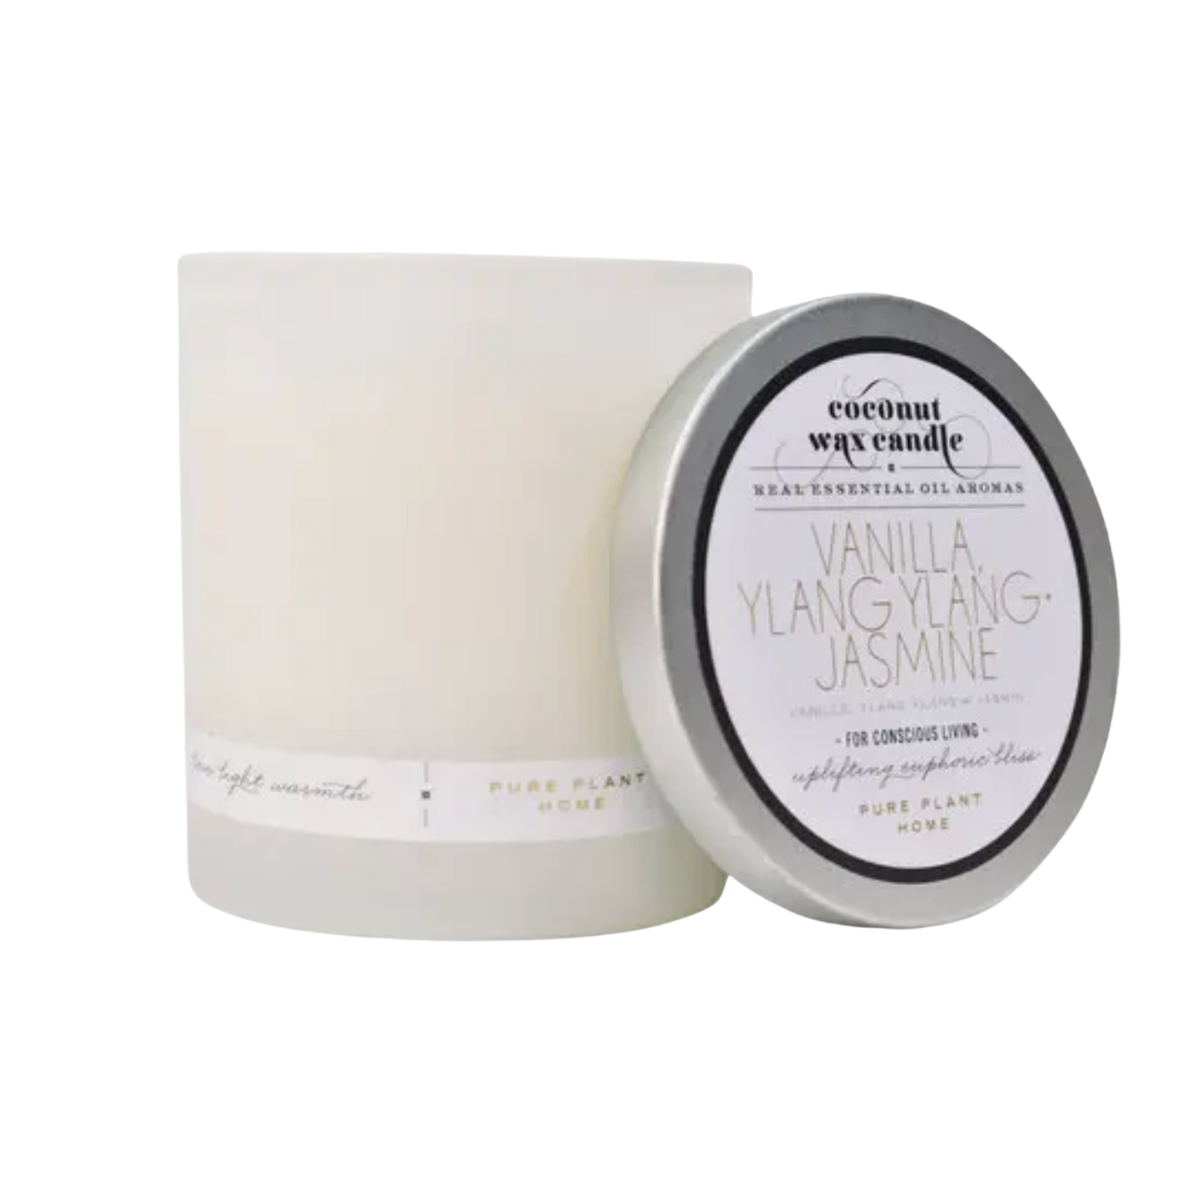 Vanilla Ylang Ylang Jasmine Real Essential Oils Coconut Wax Candle